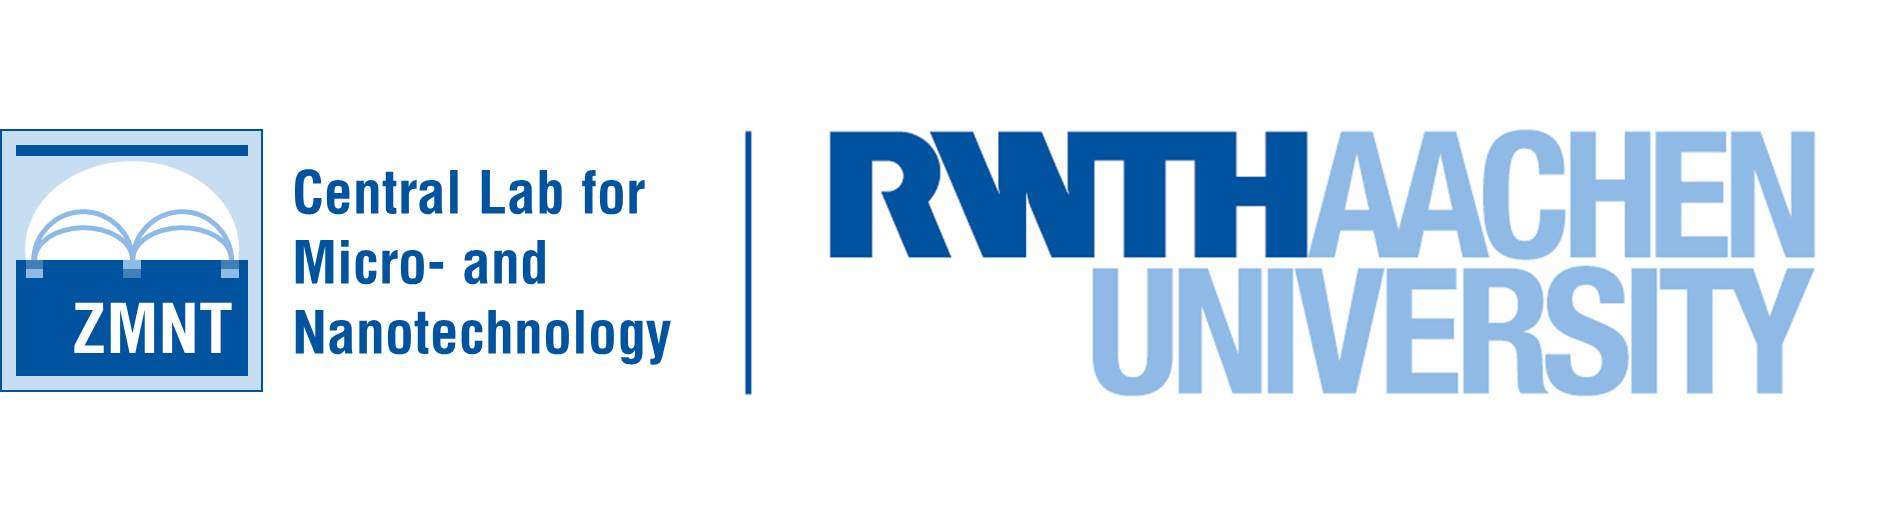 ZMNT – RWTH Aachen Univerity